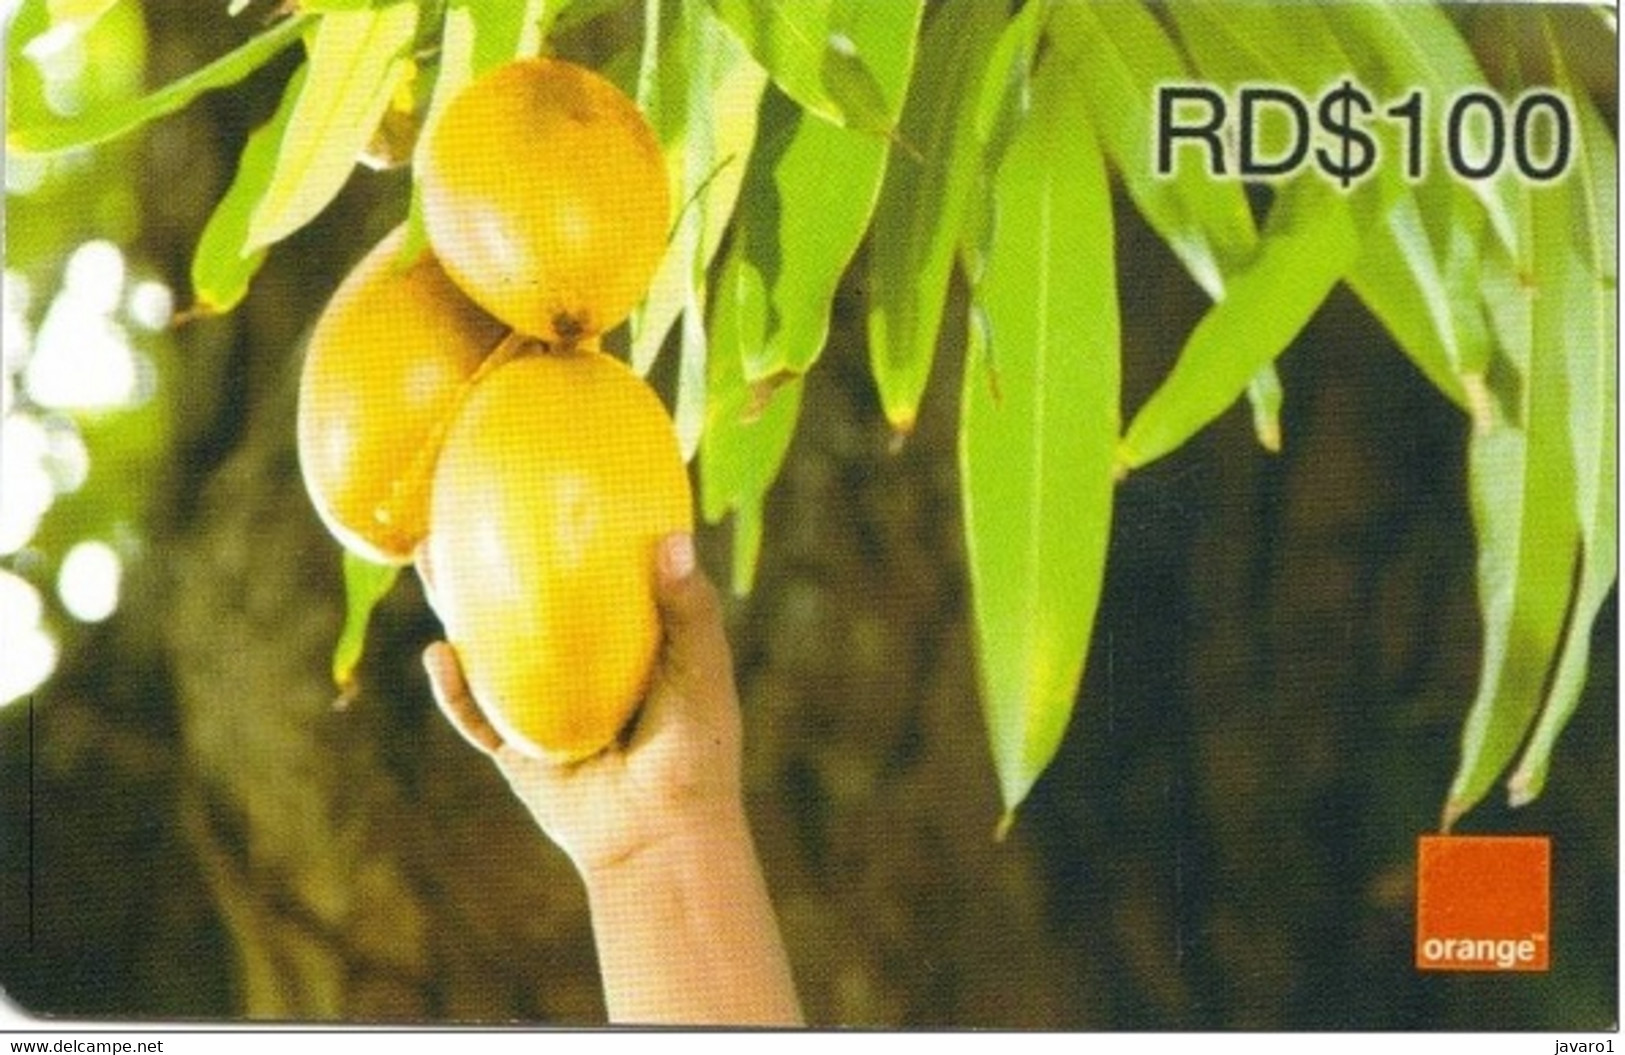 ORANGE : OR-30B RD$100 Mangoes USED Exp: 31-12-2010 - Dominicana